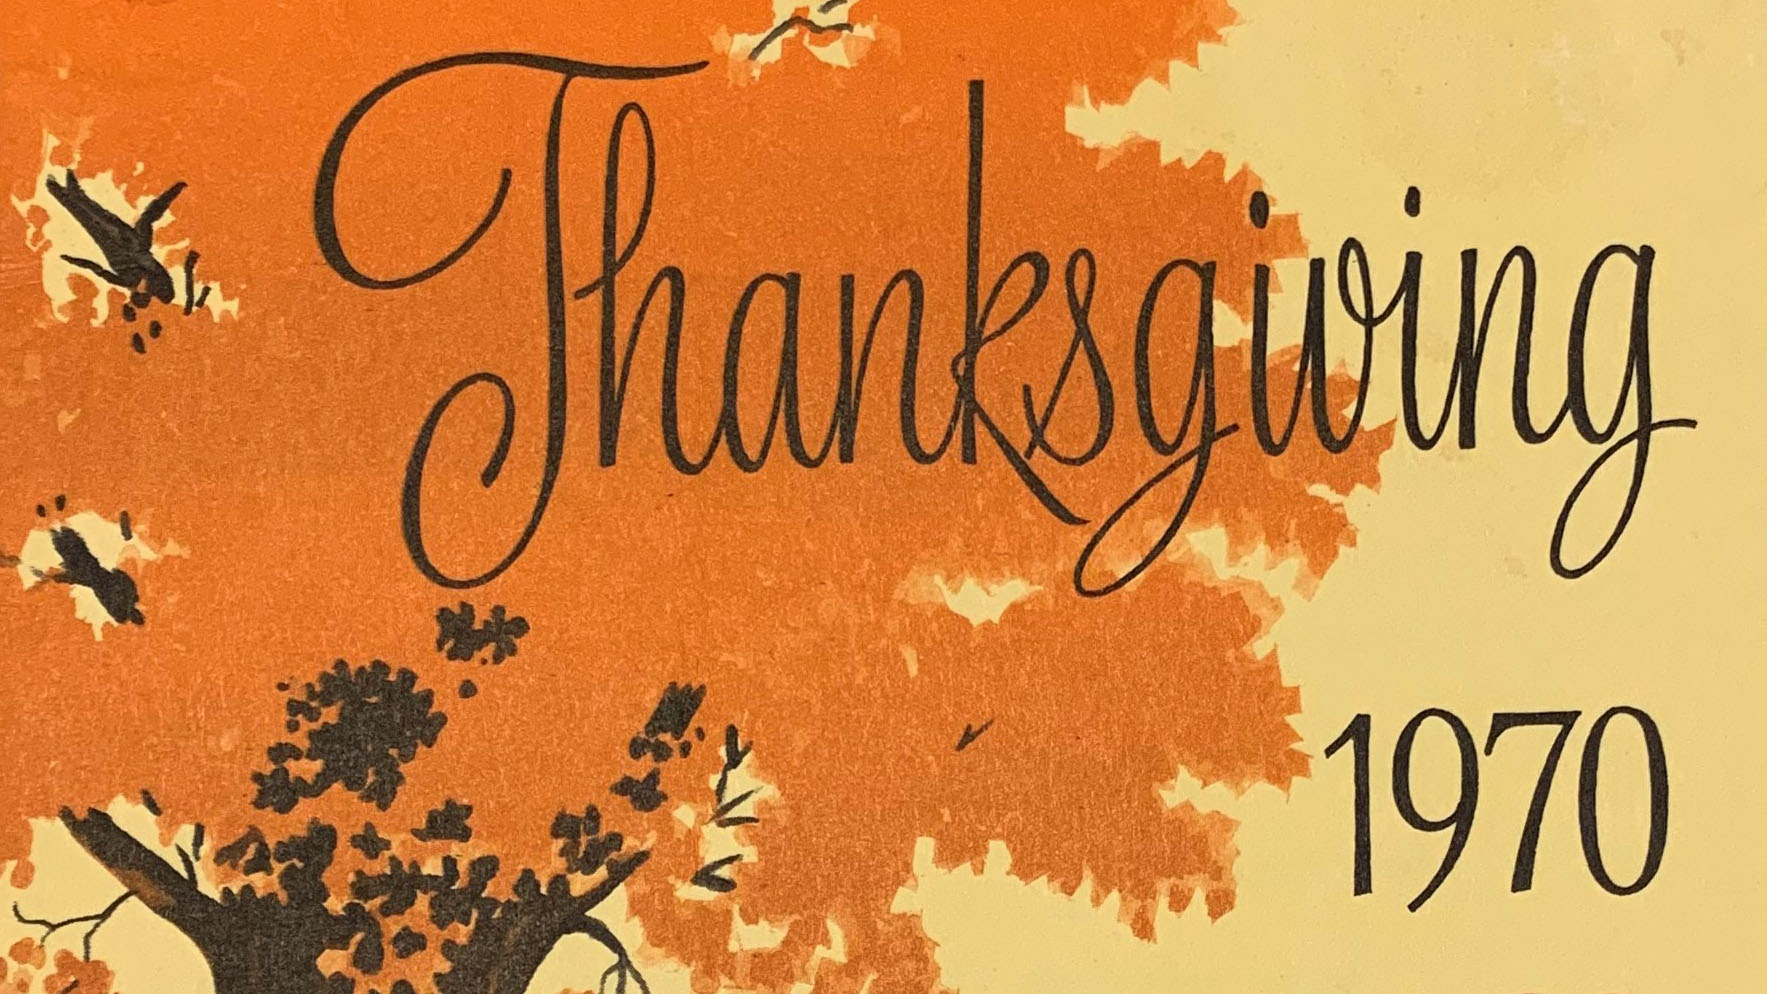 Read Historic 1930 and 1970 Thanksgiving at VA